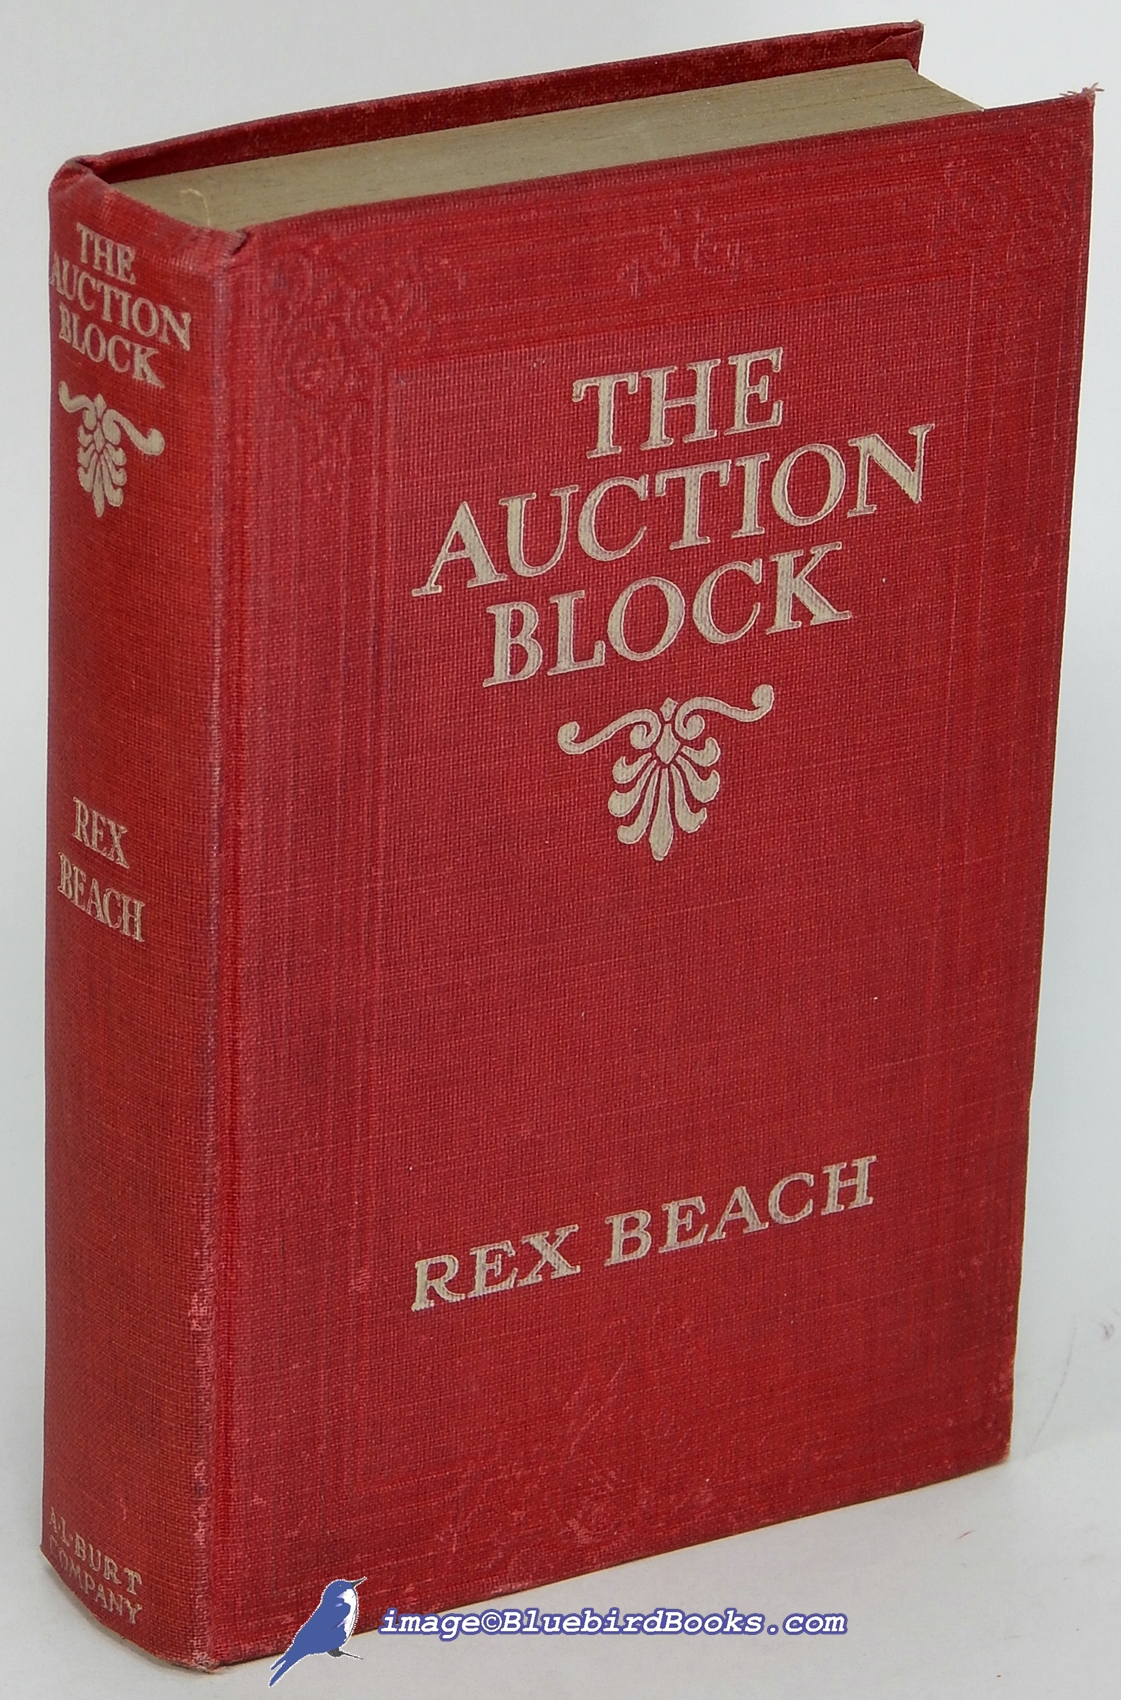 BEACH, REX - The Auction Block: A Novel of New York Life